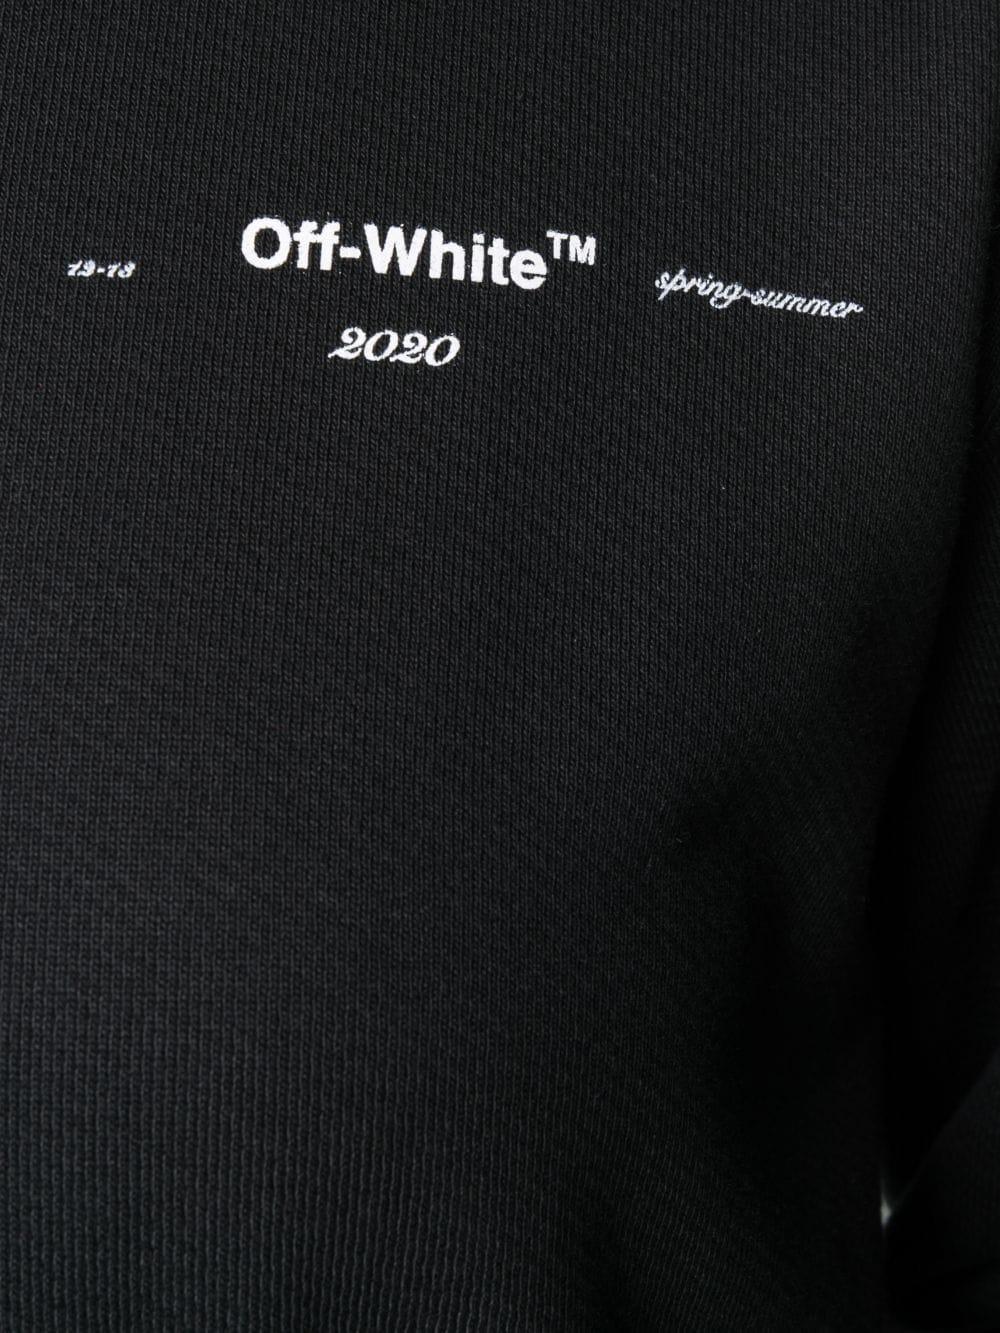 Off-White c/o Virgil Abloh Puzzle Arrows Print Sweatshirt in Black 